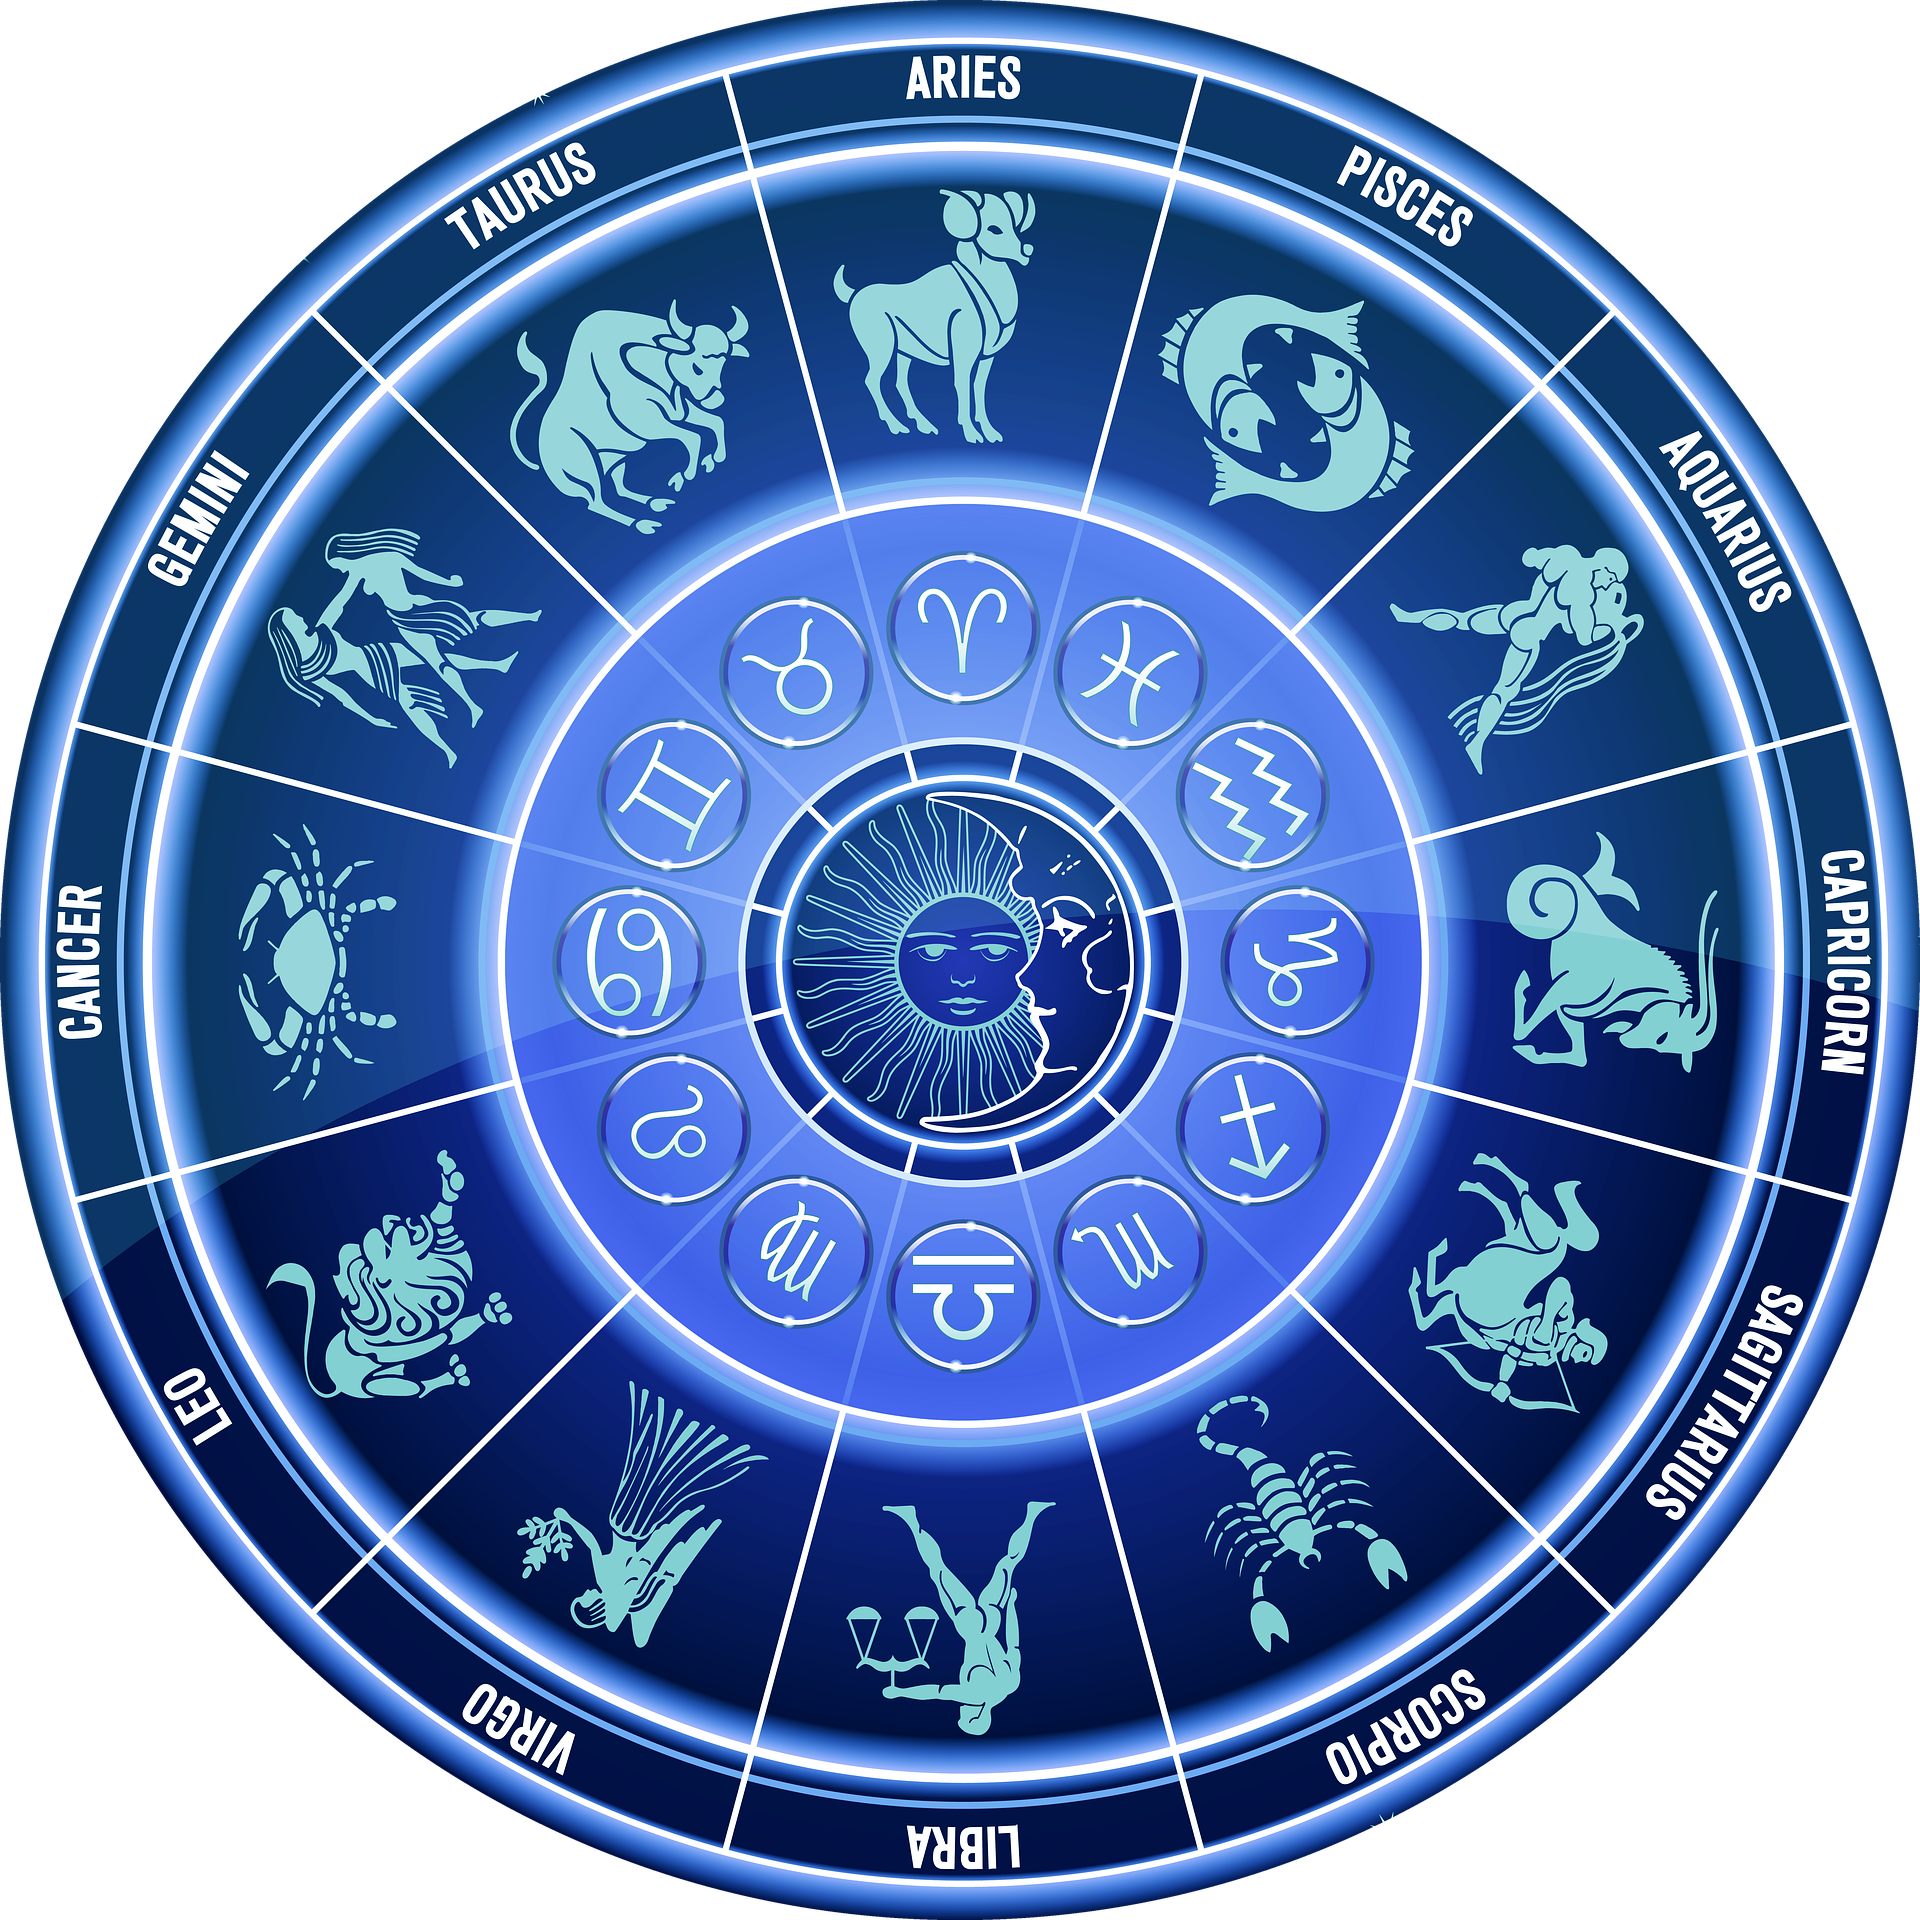 A blue wheel with zodiac symbols